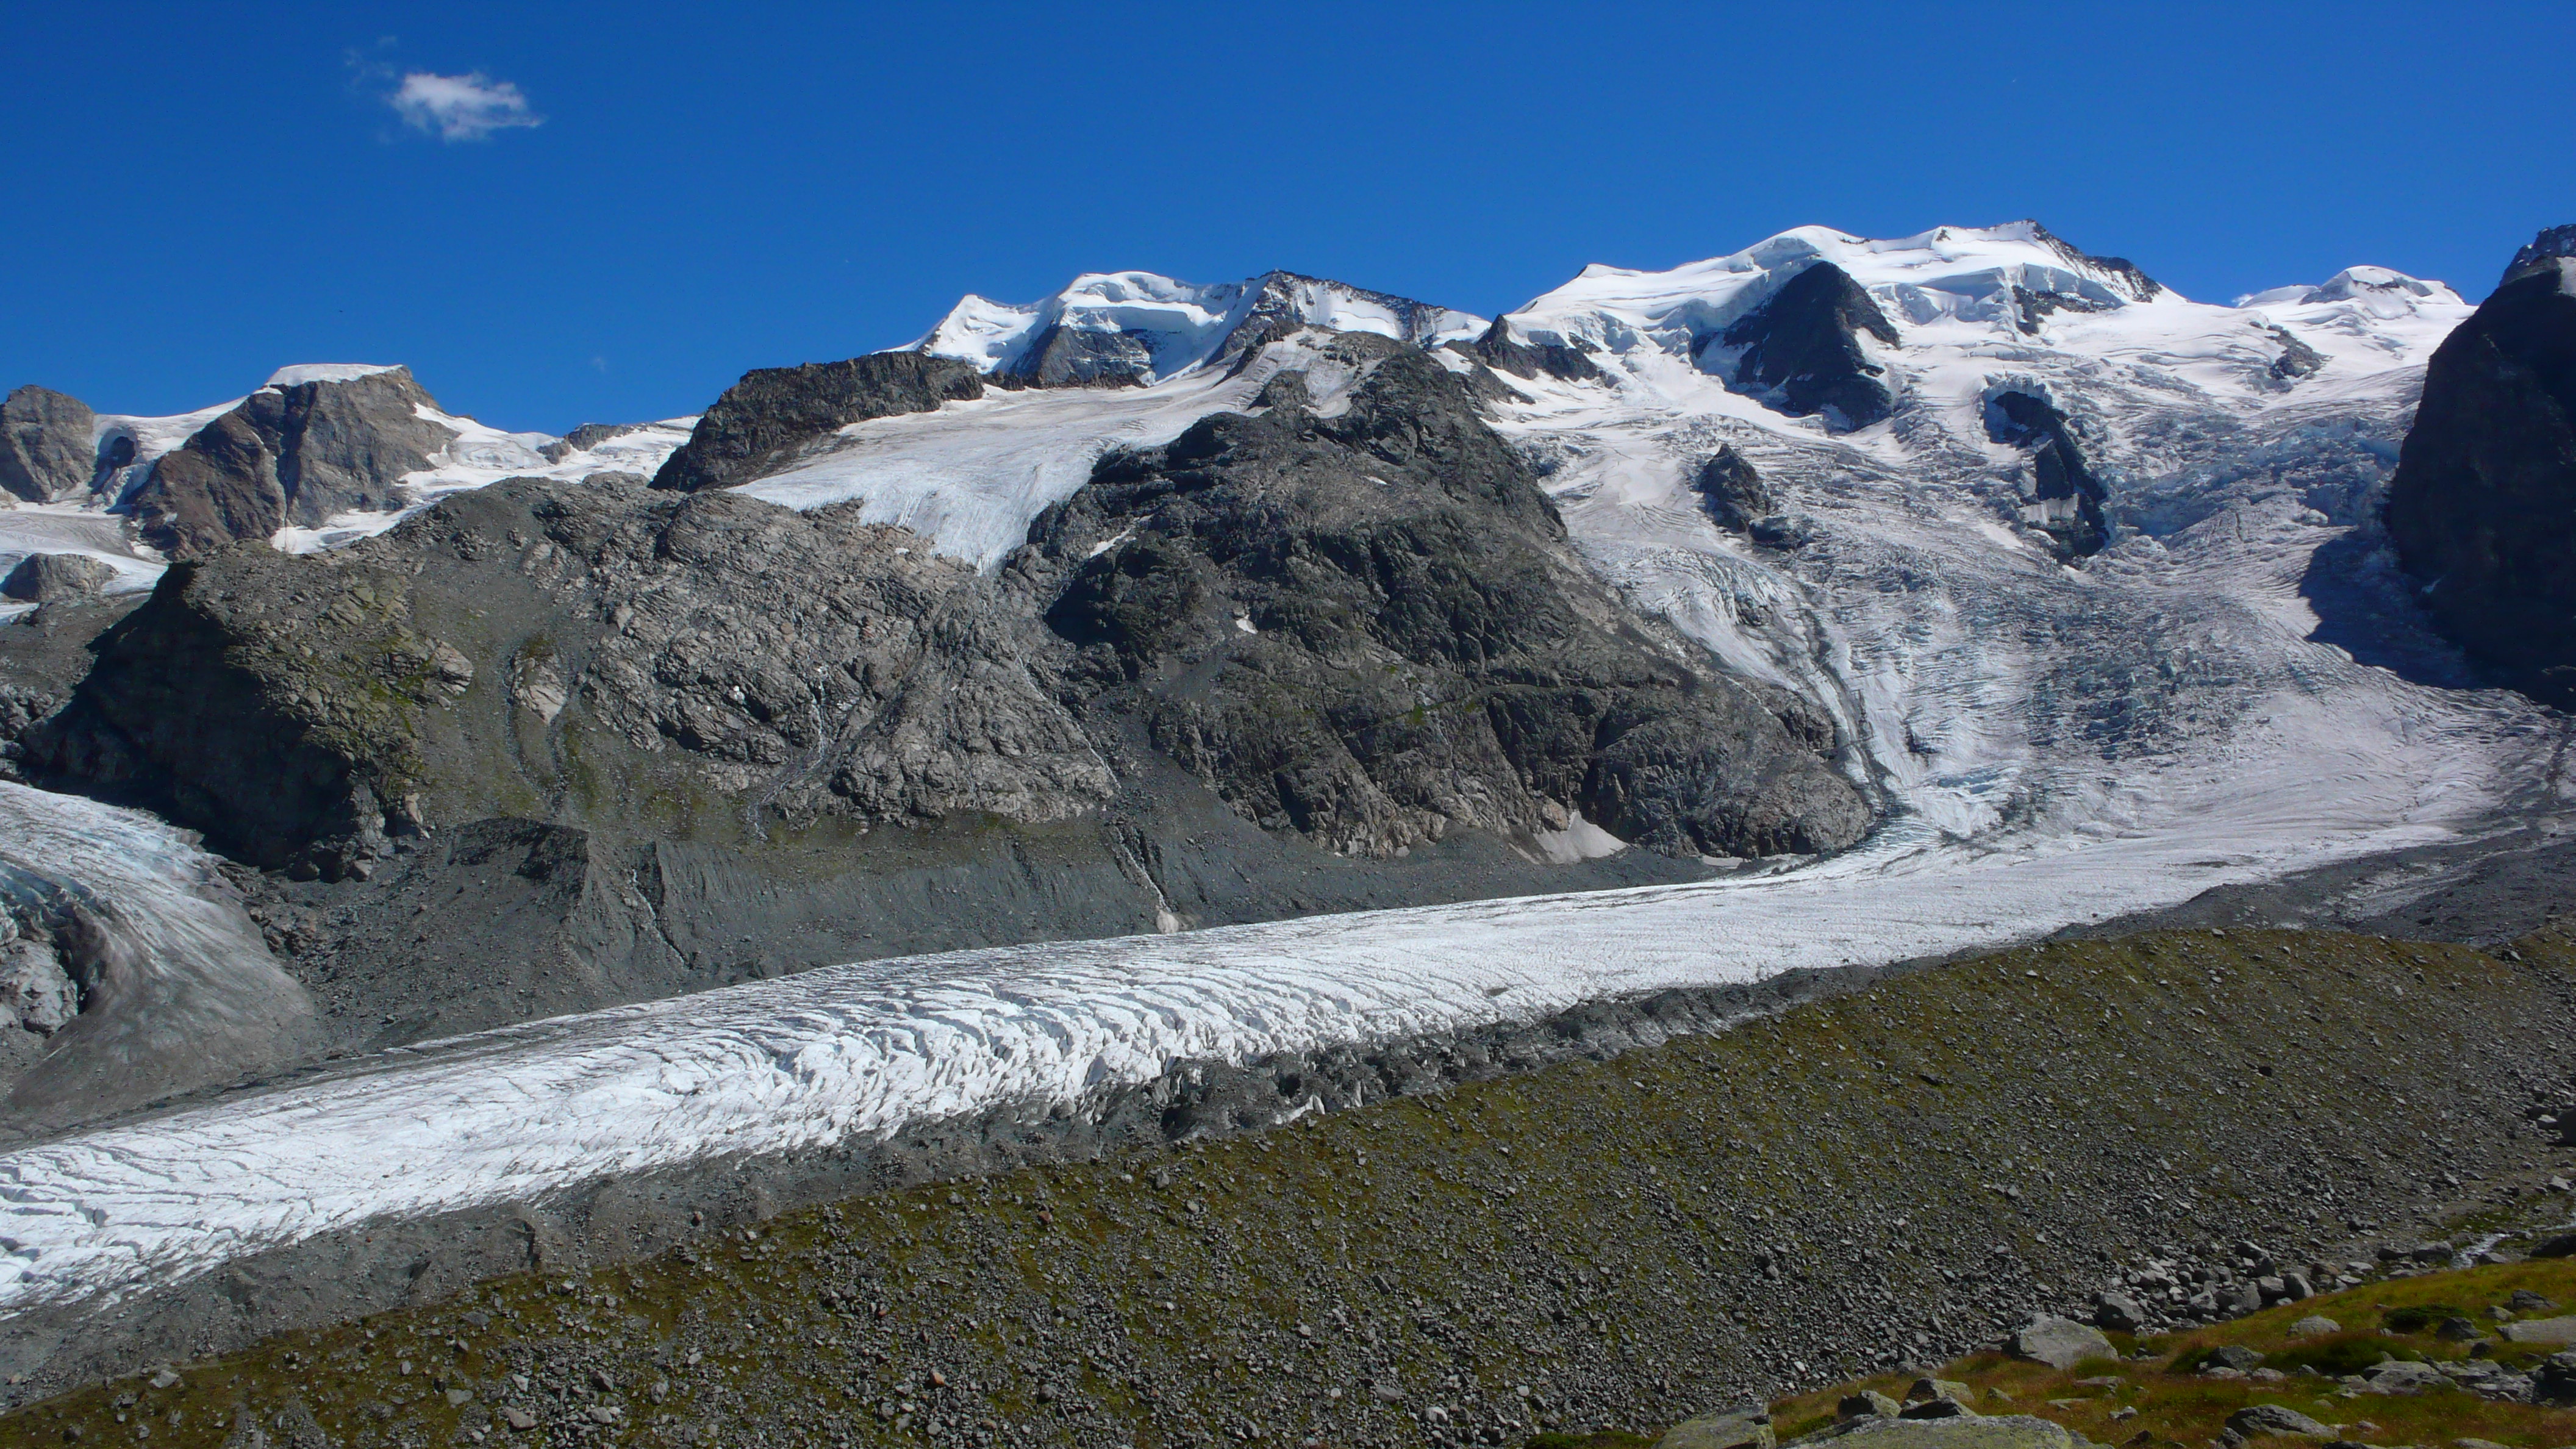 Looking down on the Vadret da Morteratsch (Morteratsch Glacier) from just below the Chamanna Boval hut (2495m). In the background: Piz d'Arlas (3375m), Piz Cambrena (3606m), Piz Palü (3901m), Bellavista (3922m) and Piz Zupò (3996m)